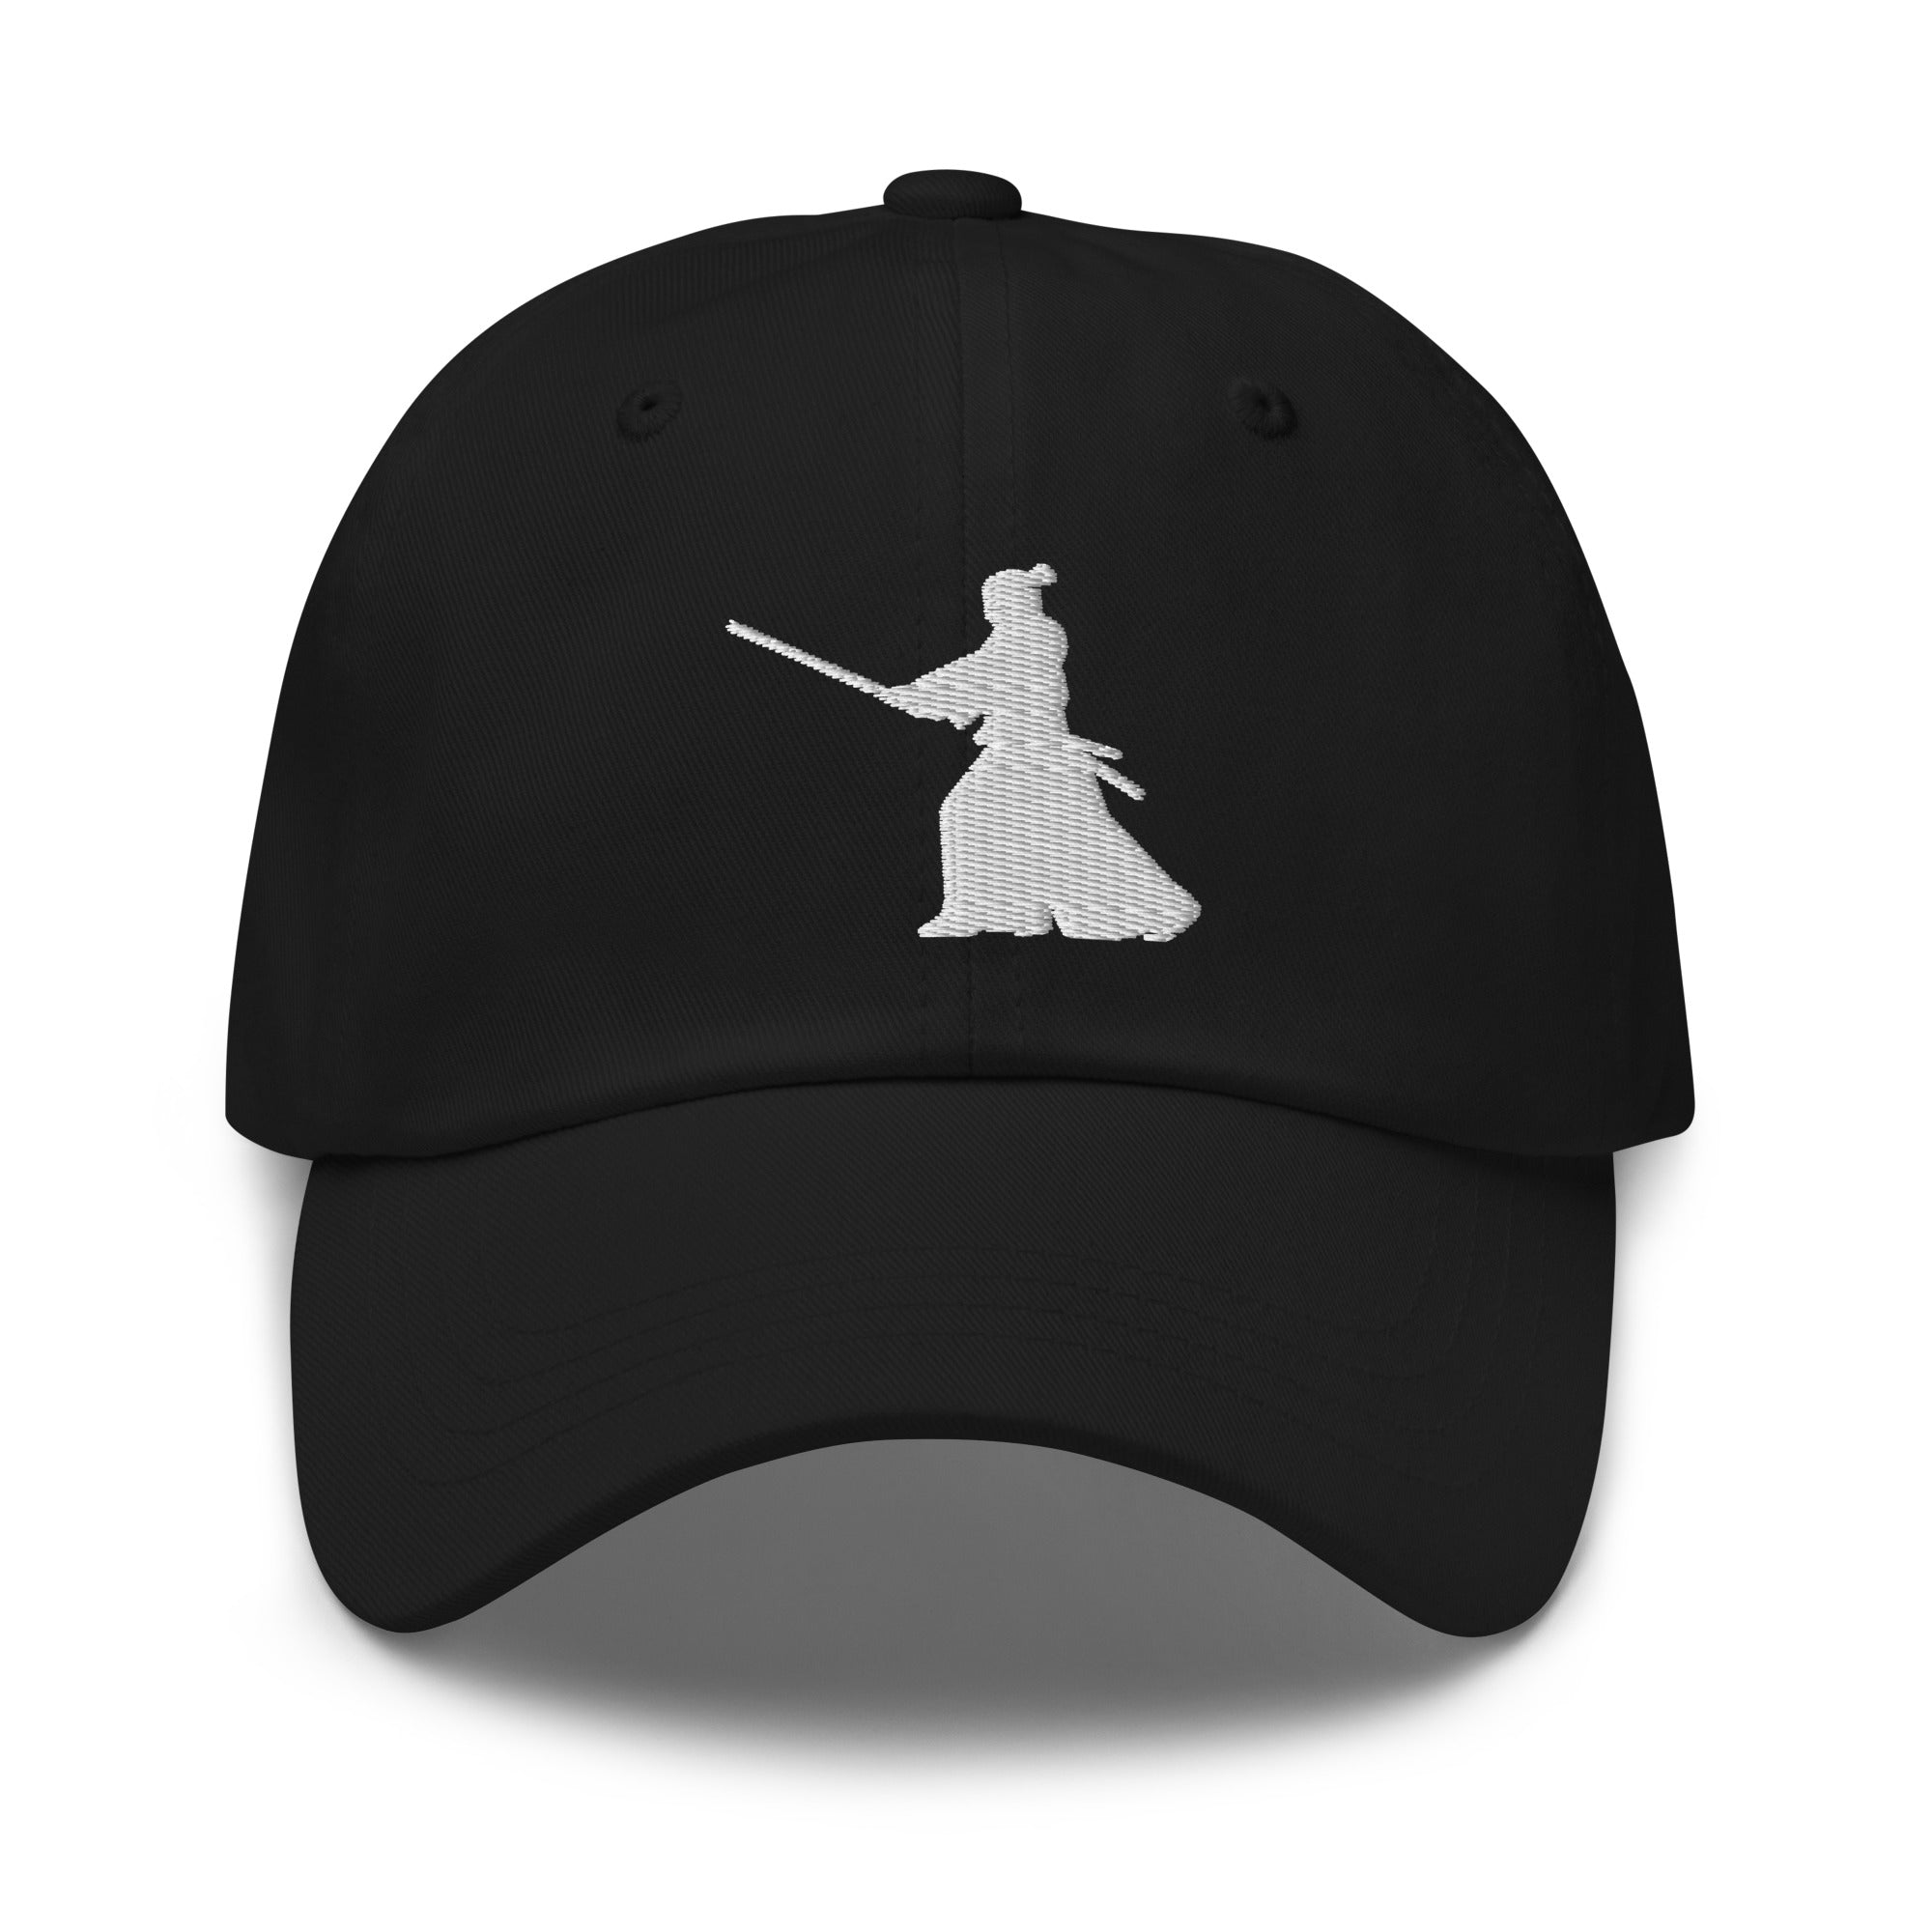 Ronin Samurai Warrior Swordsman Embroidered Baseball Cap Seigan No Kamae Stance Dad hat - Edge of Life Designs